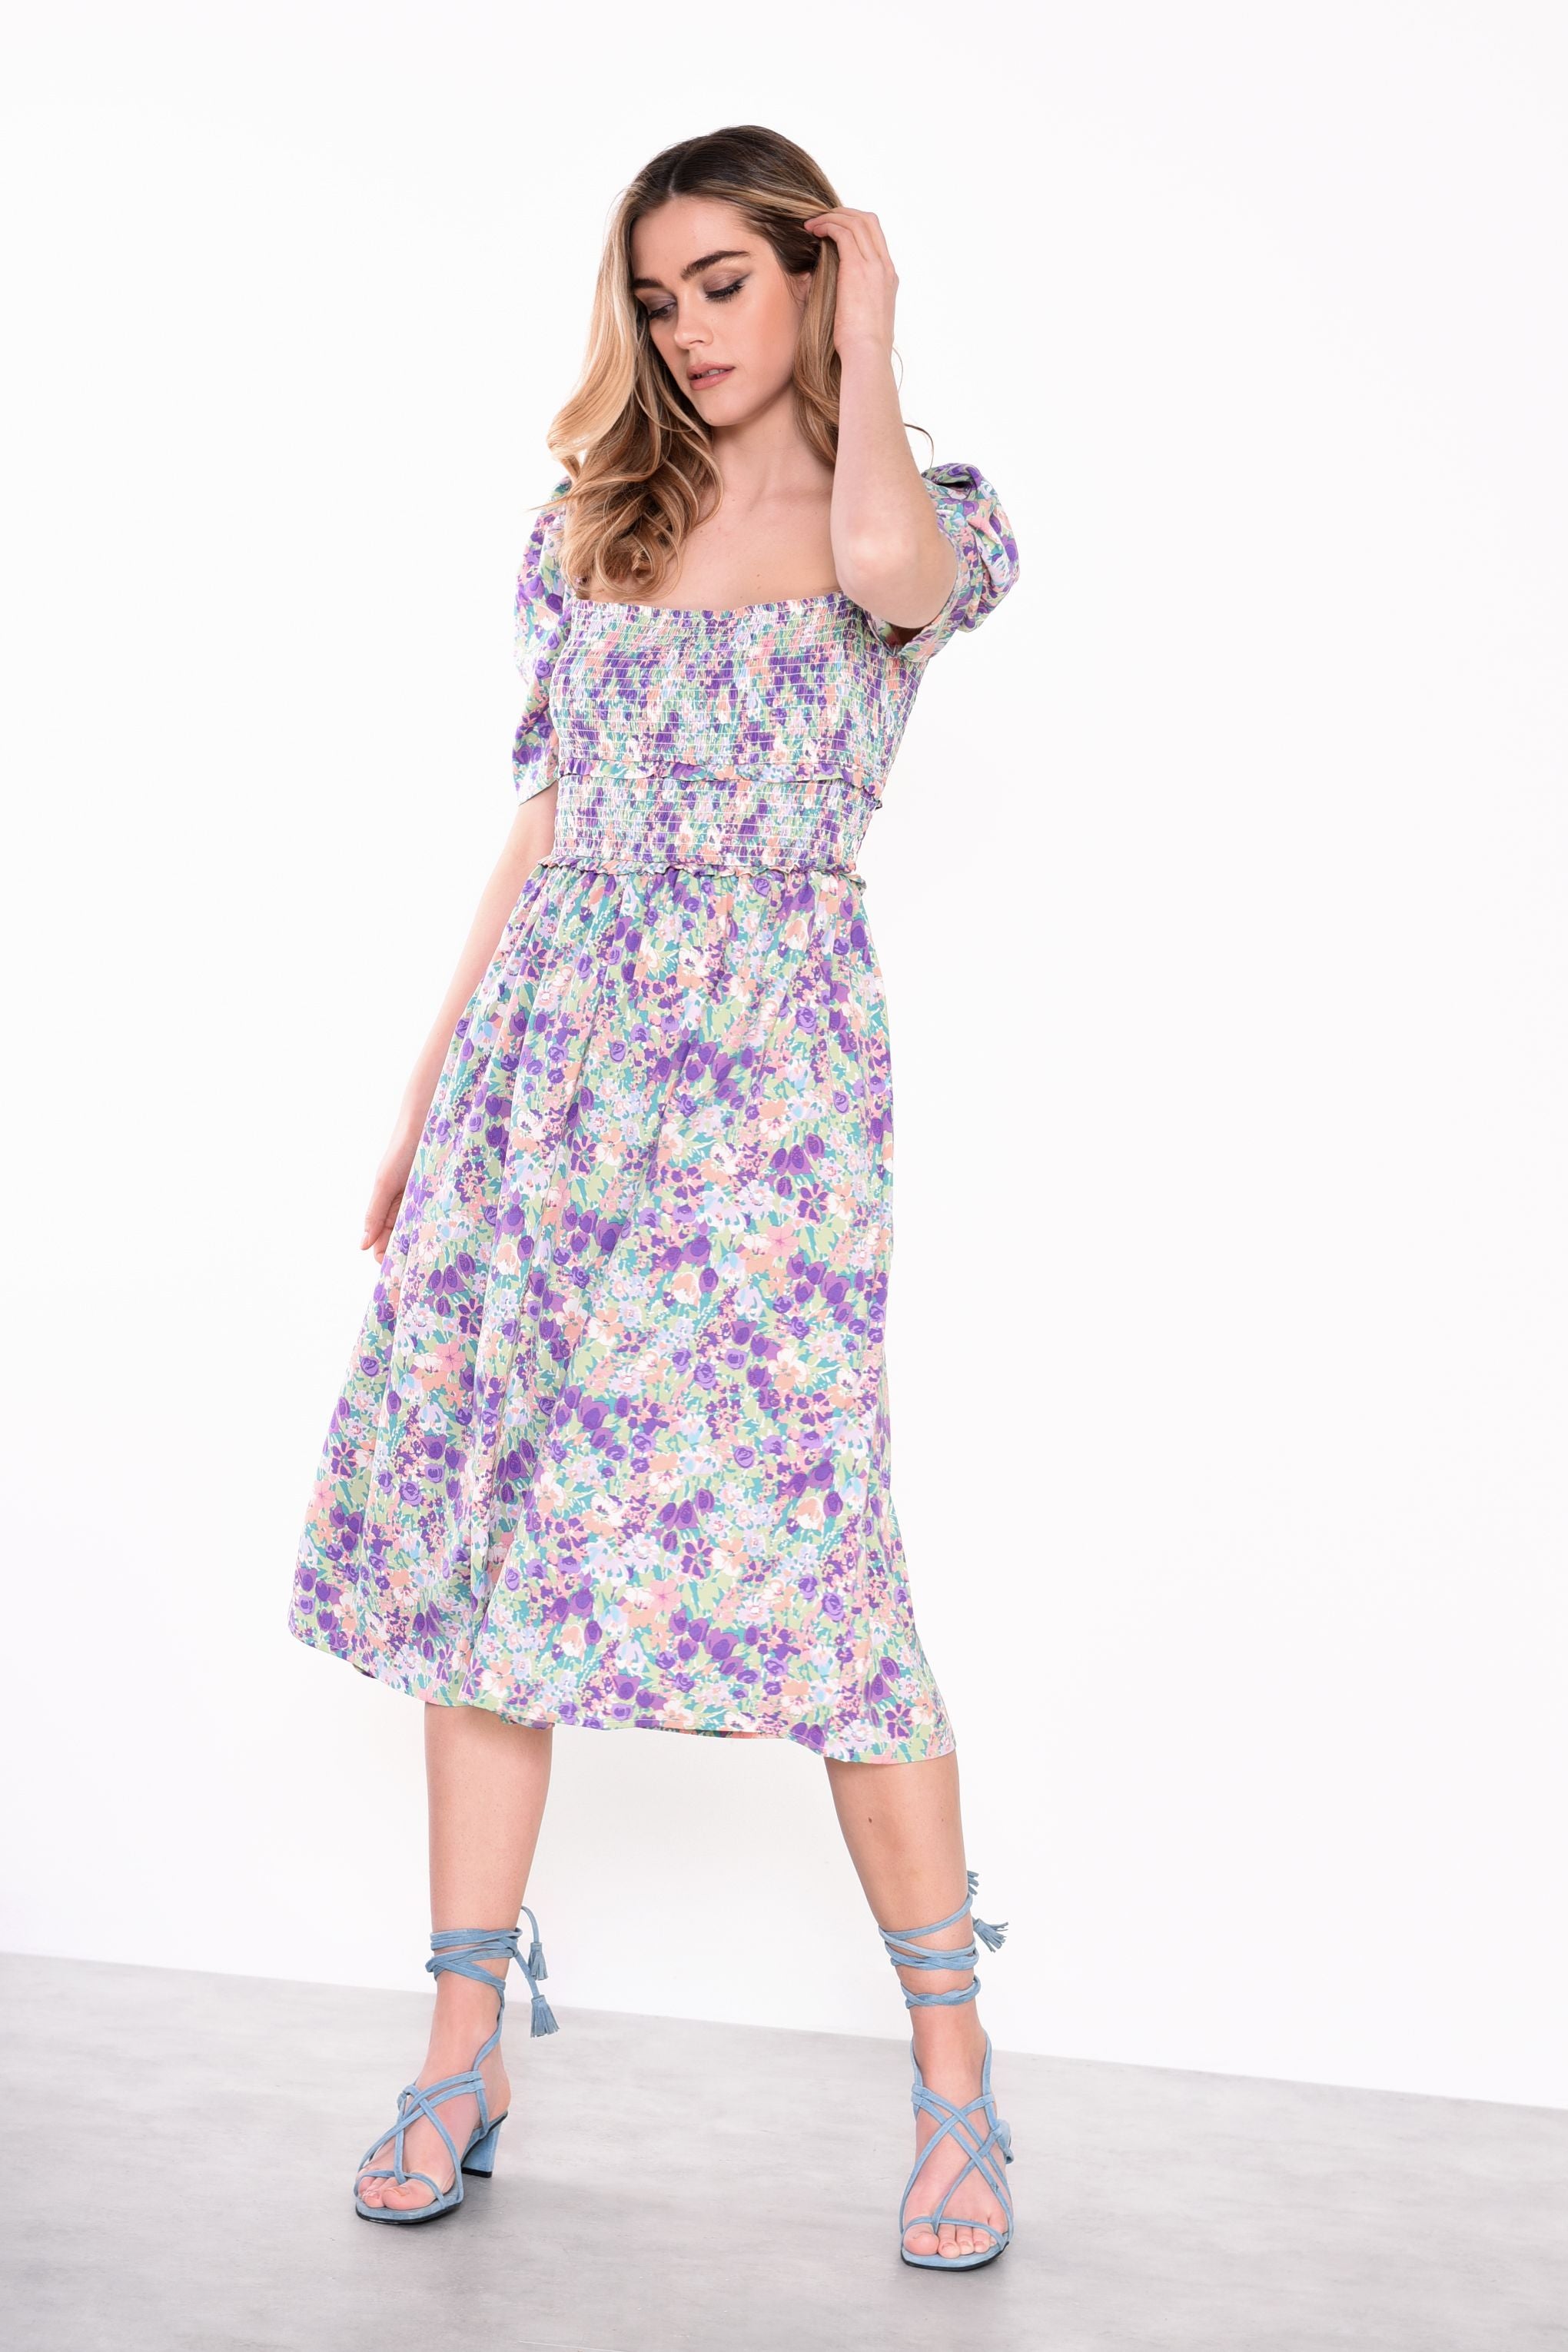 Glamorous Lilac Garden Floral Square Neck Short Sleeve Midi Dress